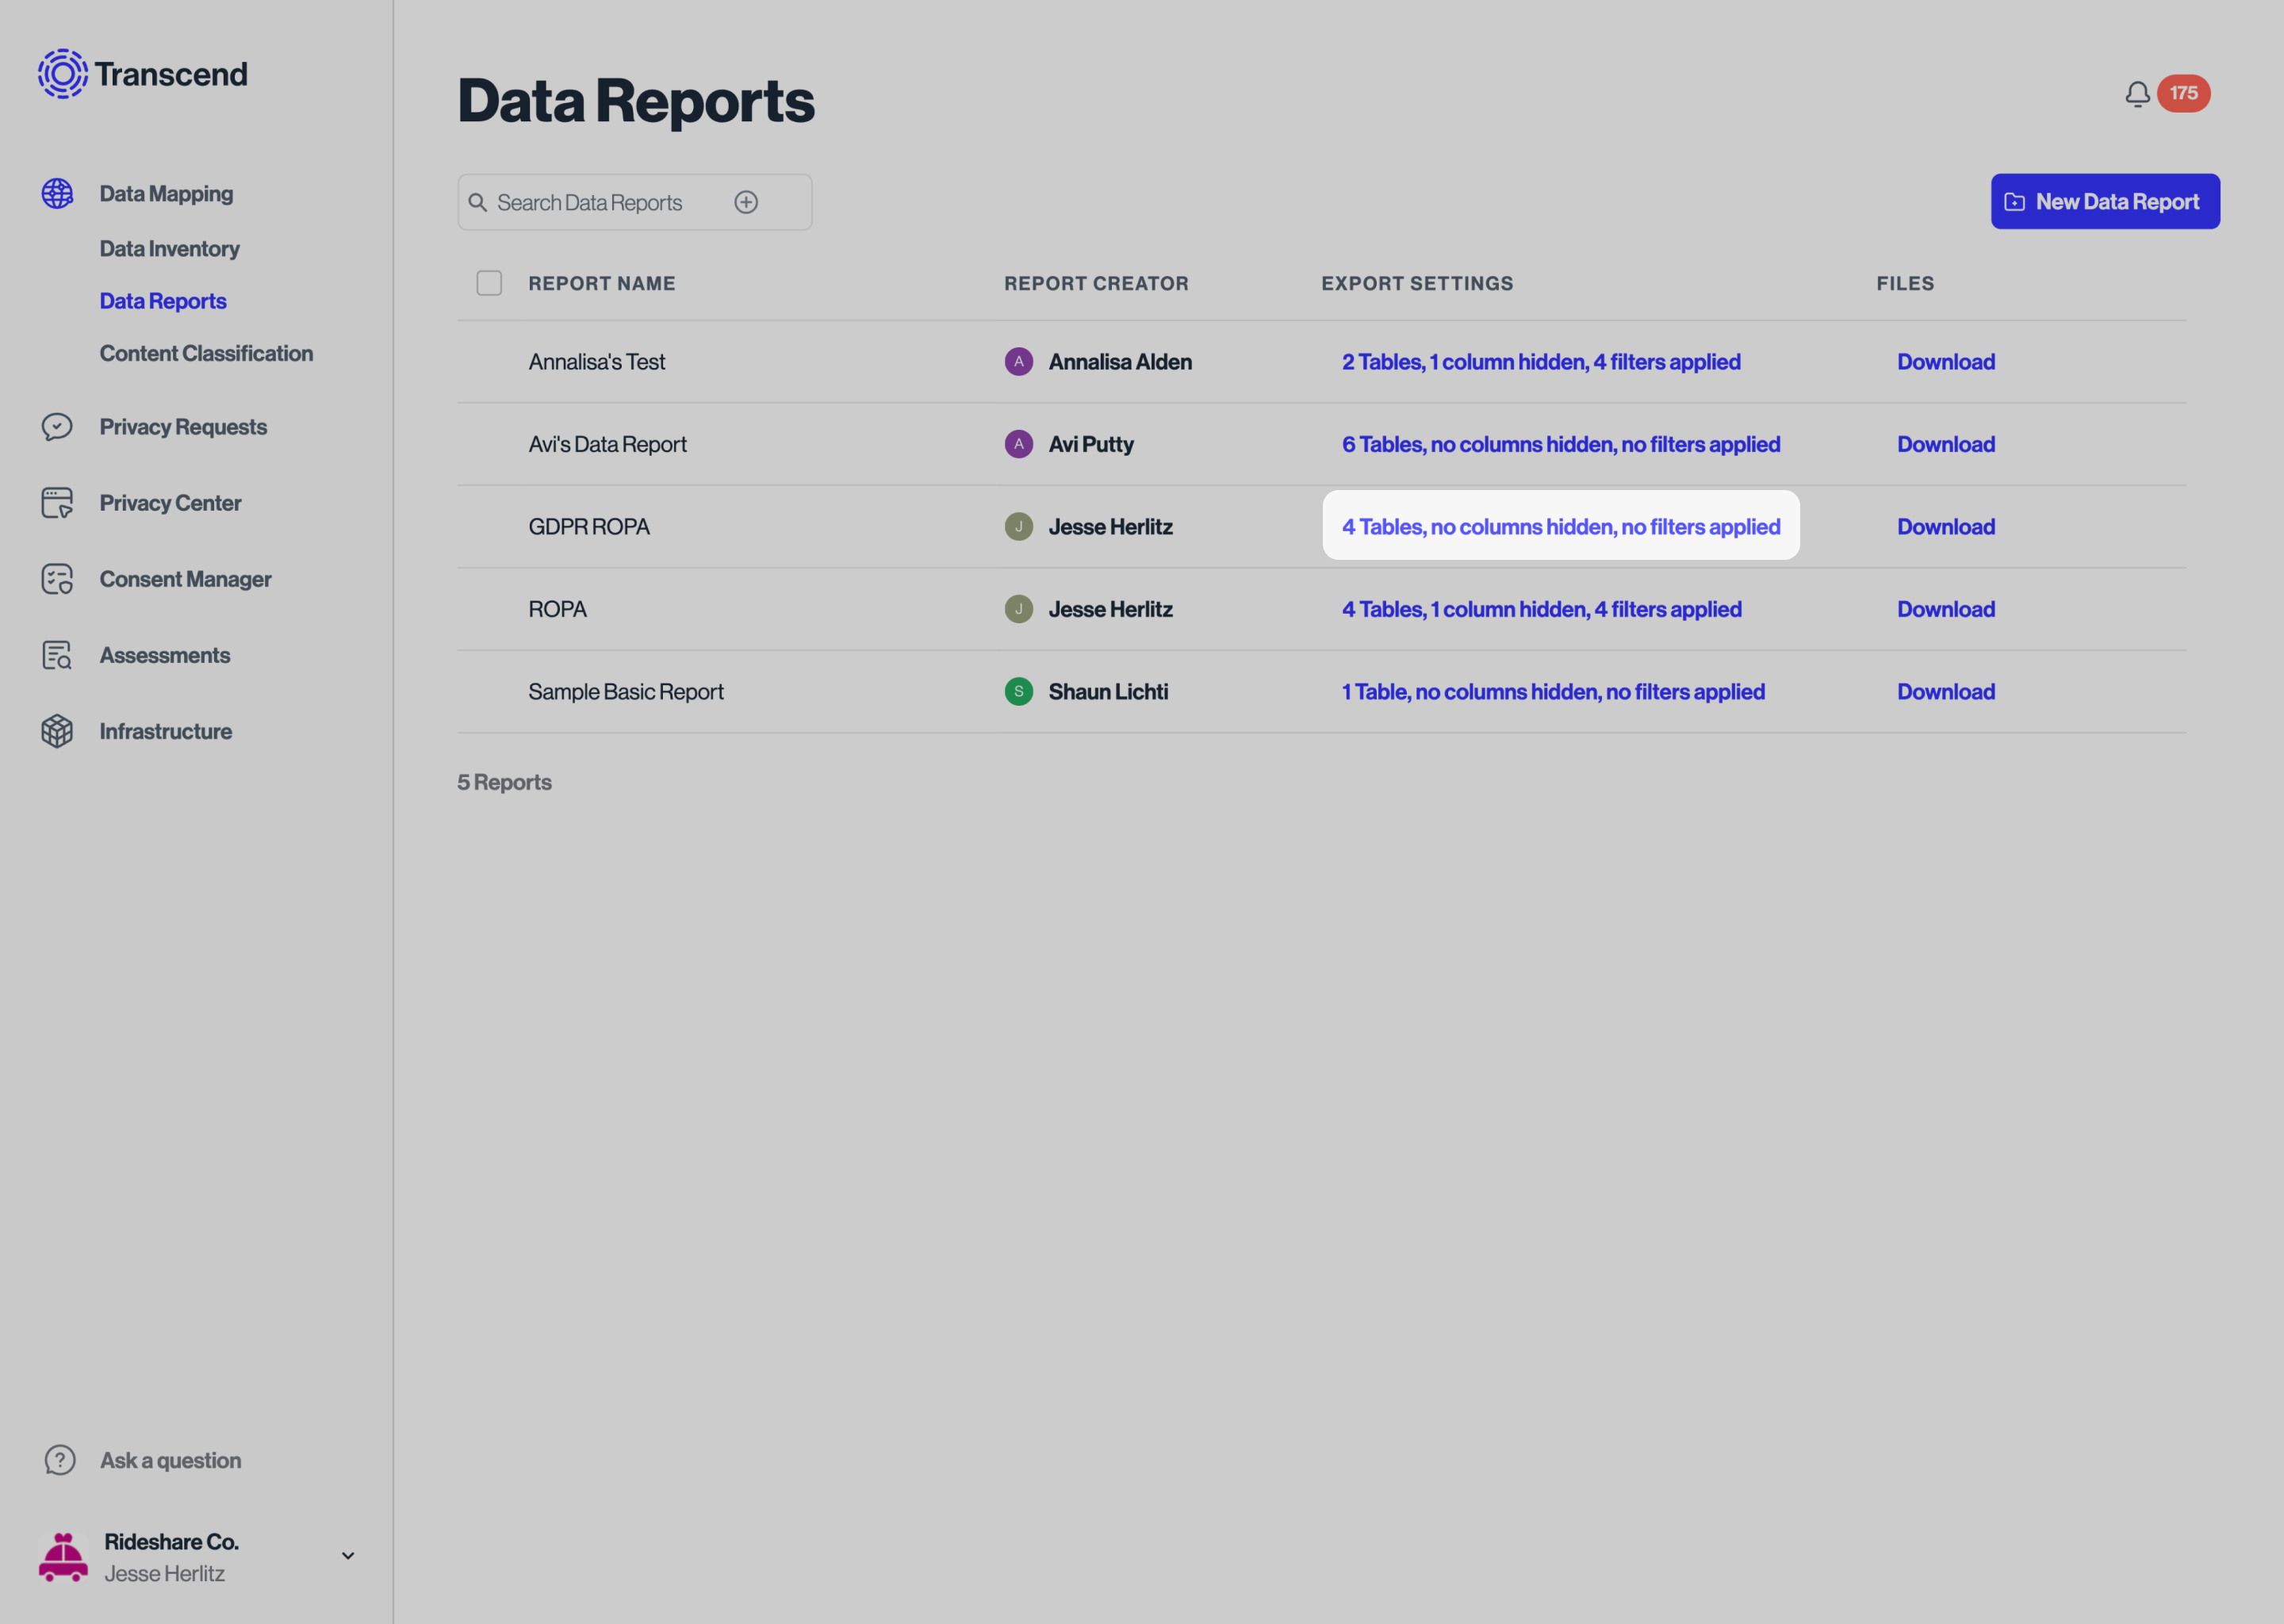 Change Data Report Export Settings